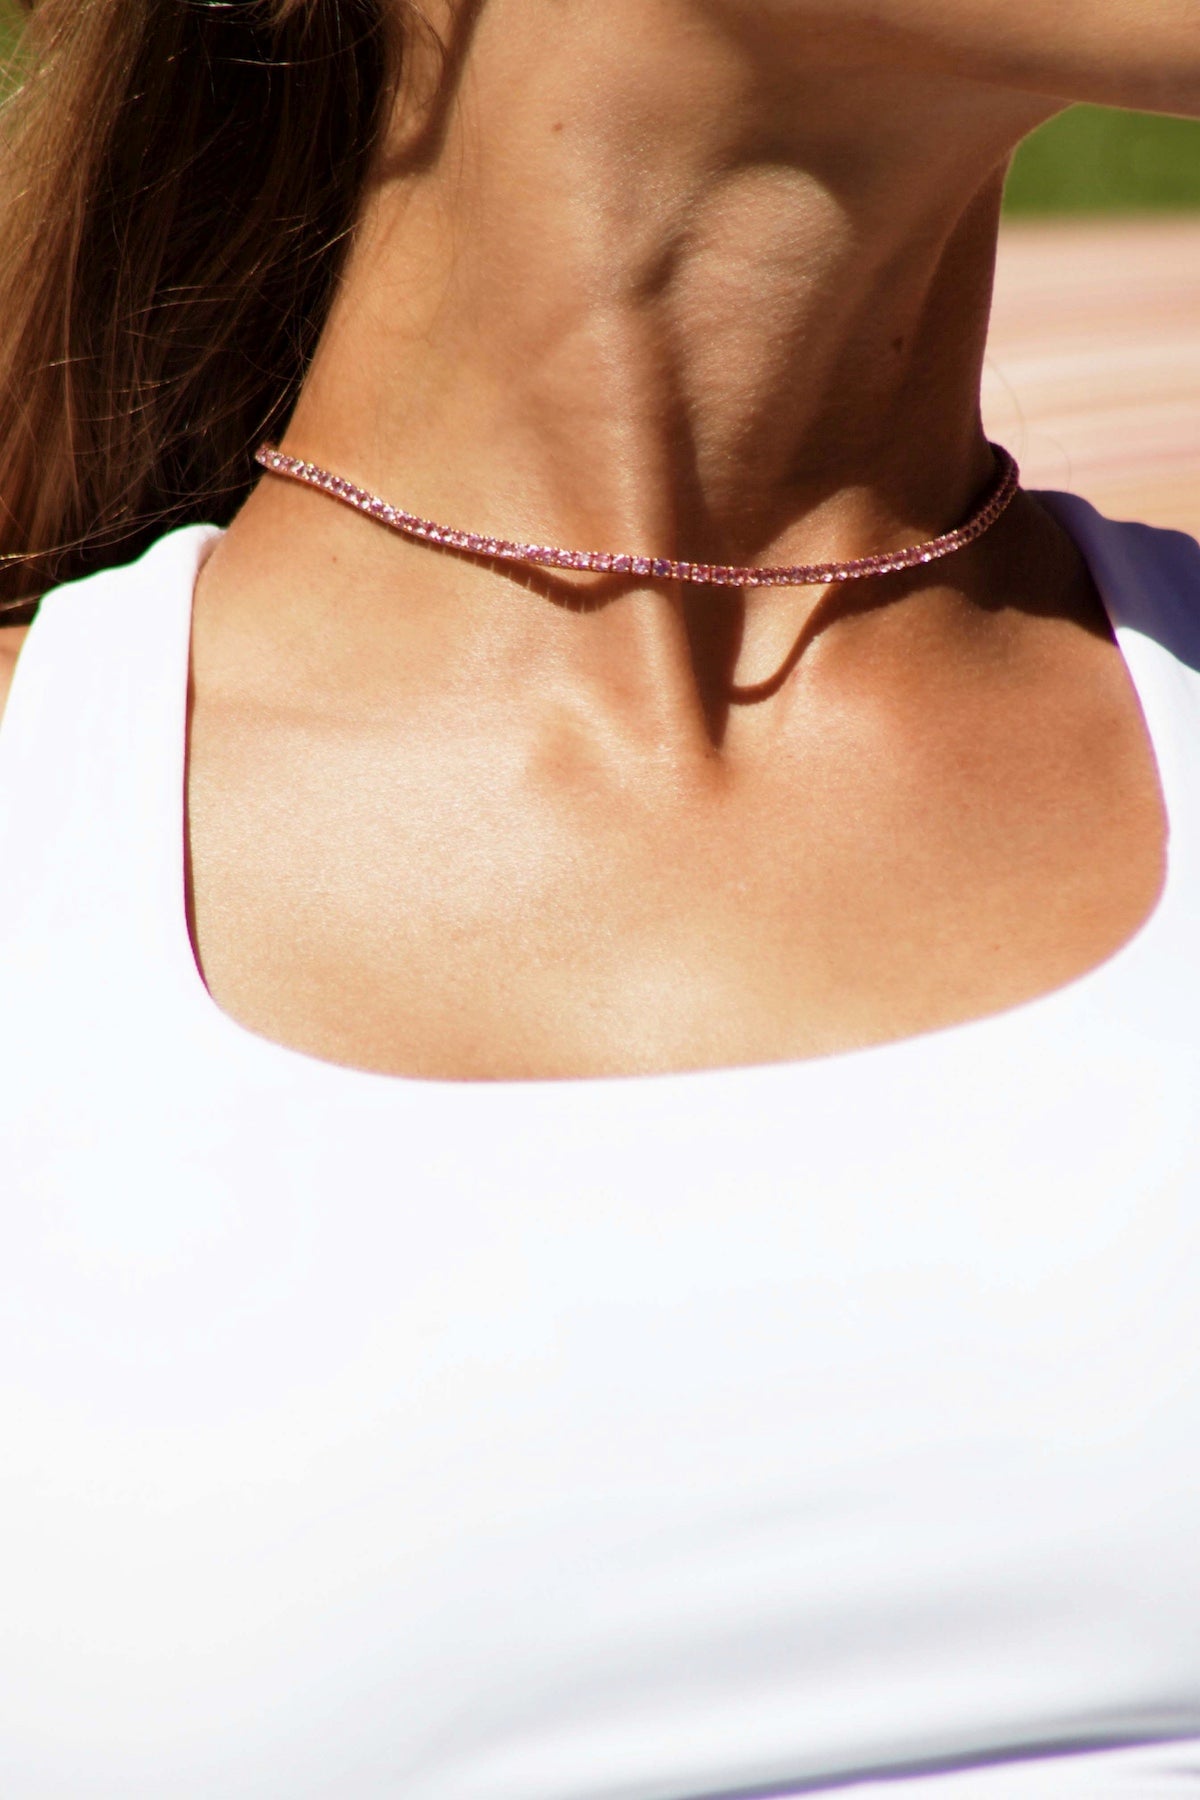 Pink Sapphire Tennis Necklace - Razny Jewelers